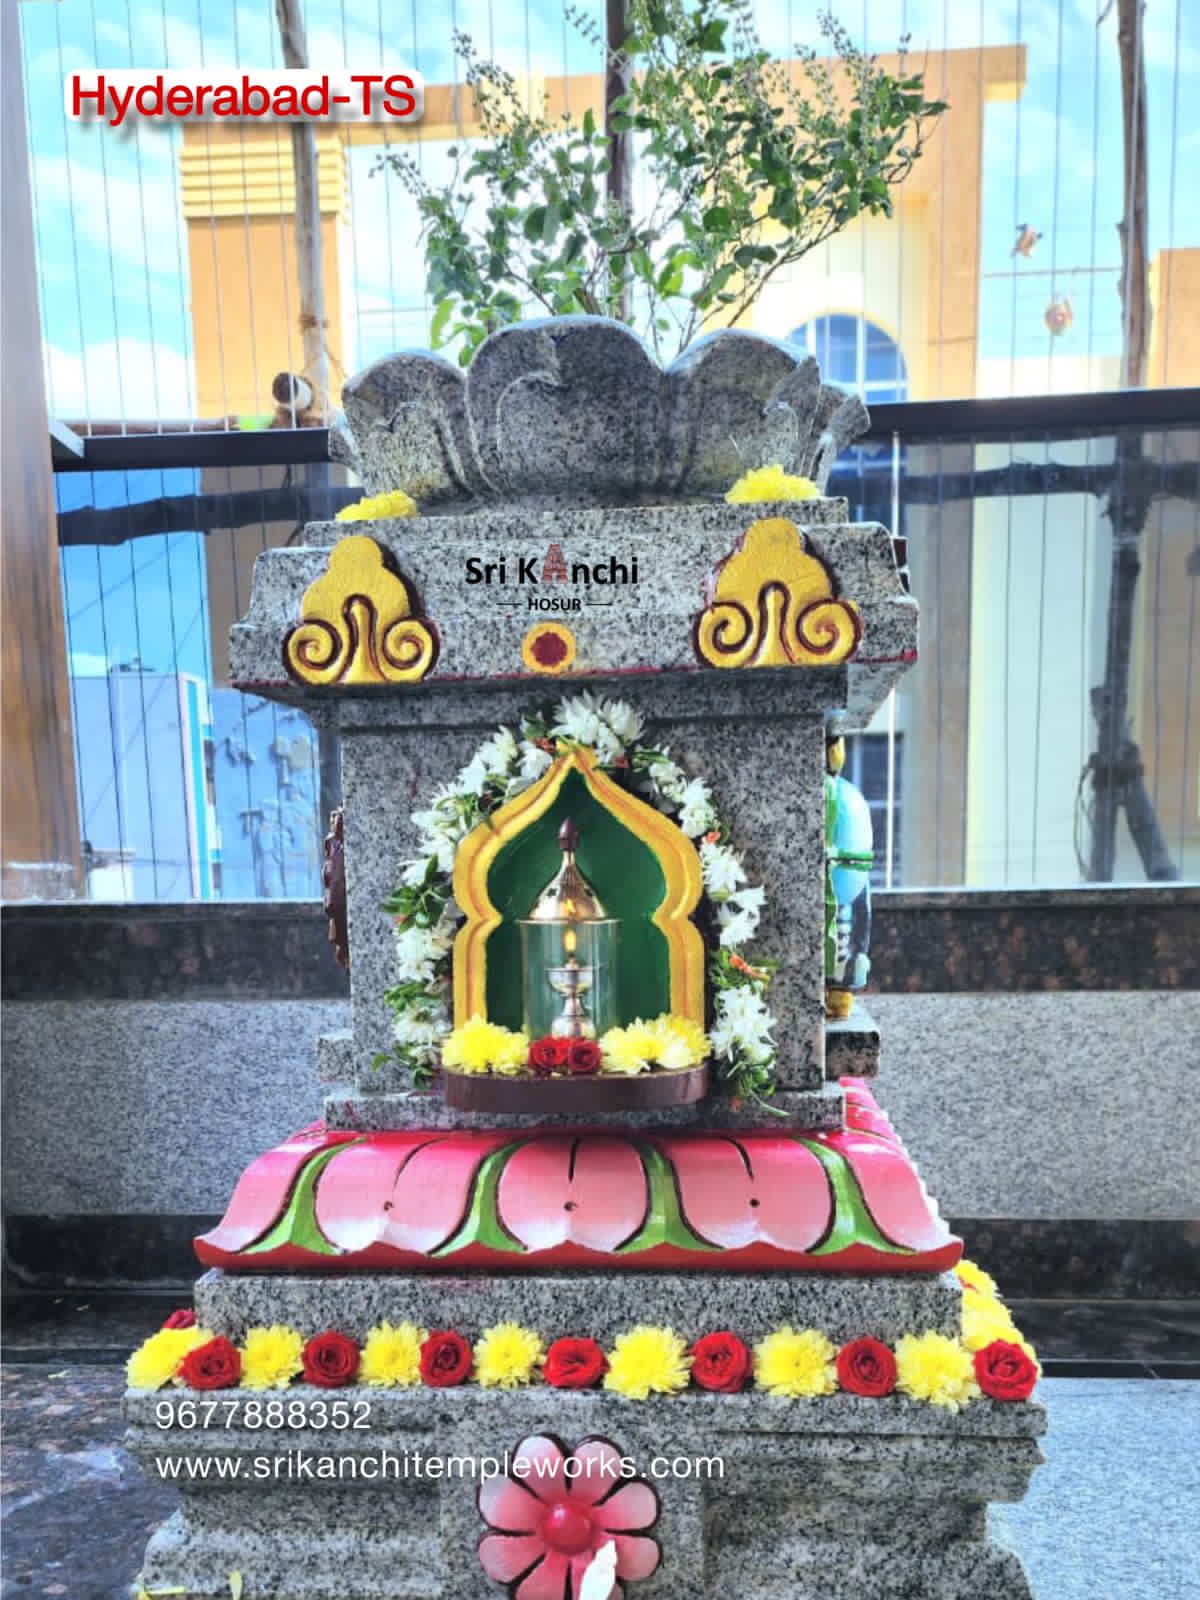 LOTUS top Tulasi maadam with Srinivasa Perumal Symbols